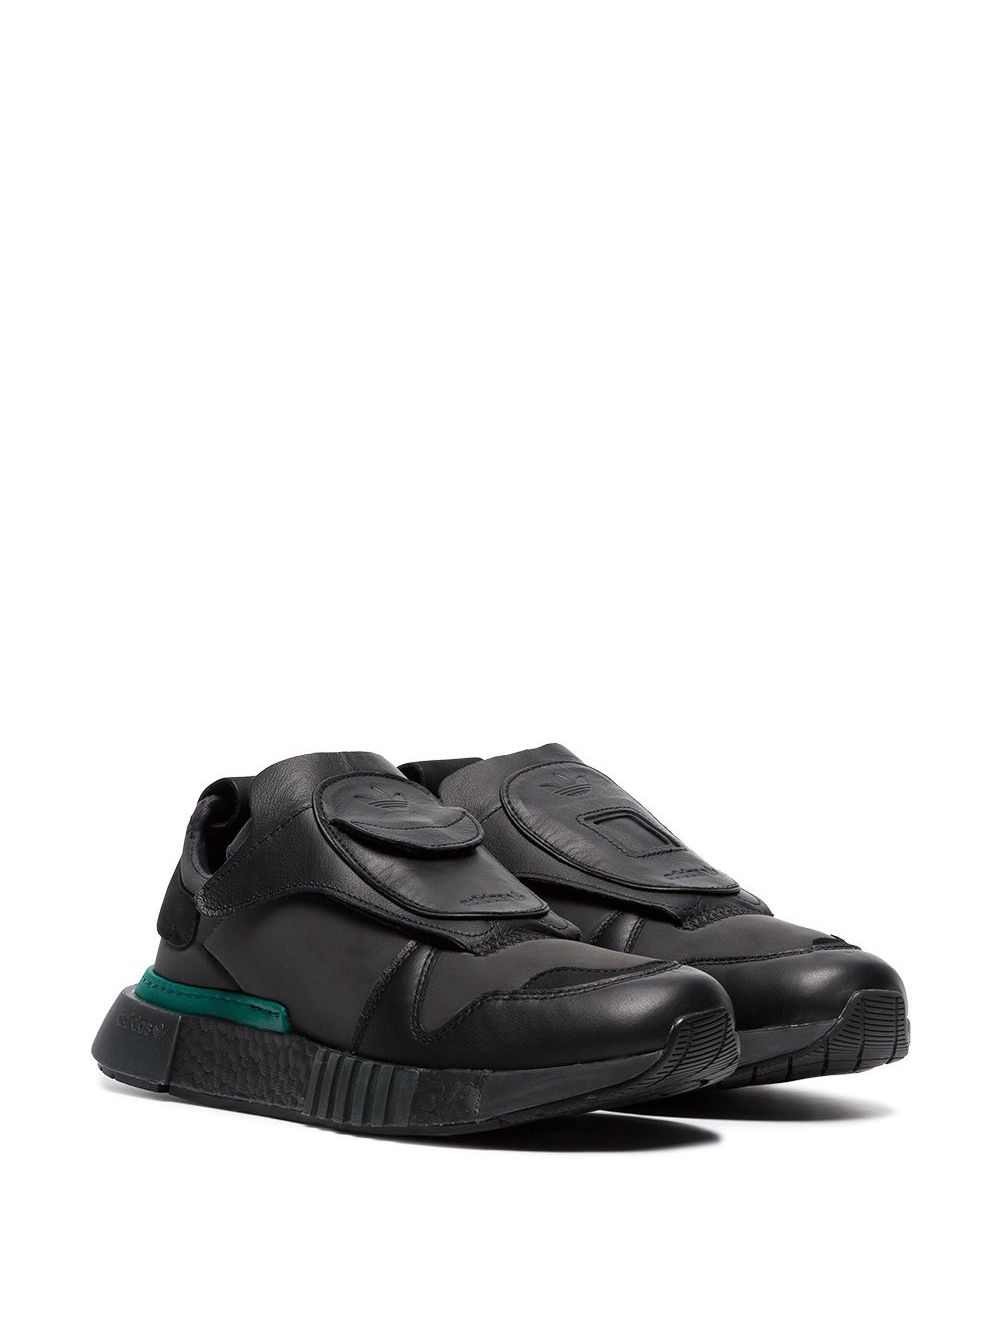 Adidas Black Futurepacer Leather Sneakers - Farfetch